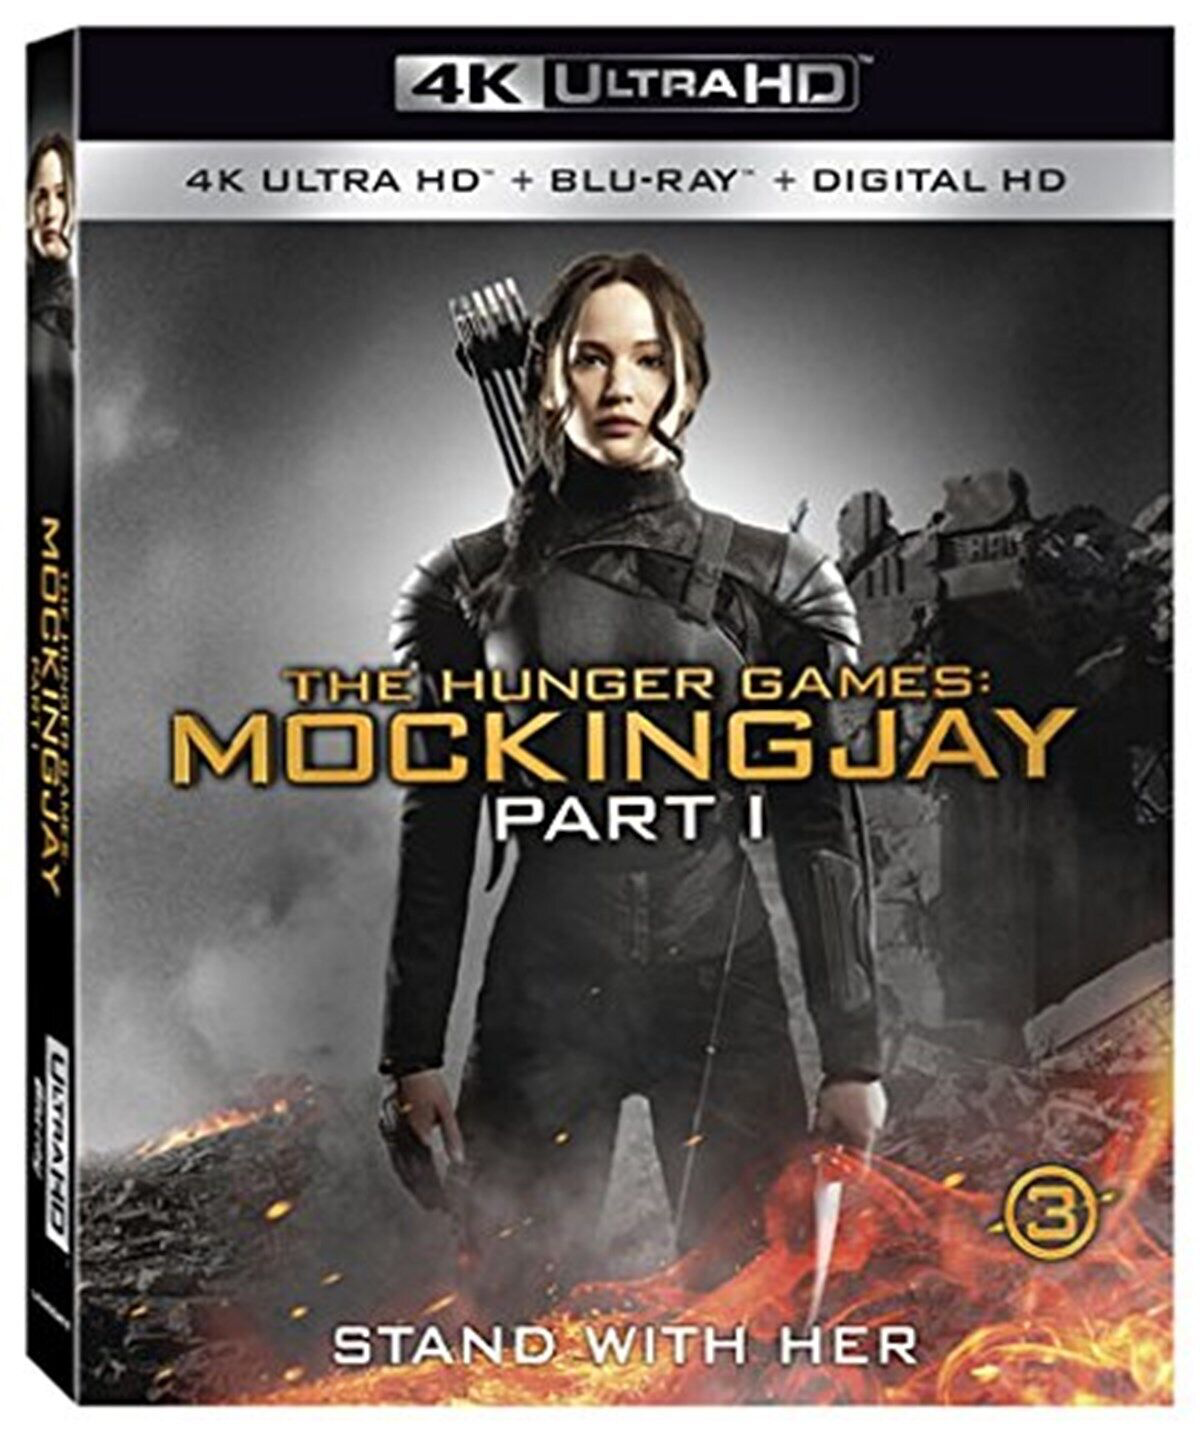 Hunger Games: Mockingjay: Part 1 - 4K Blu-ray Action/Adventure 2014 PG-13